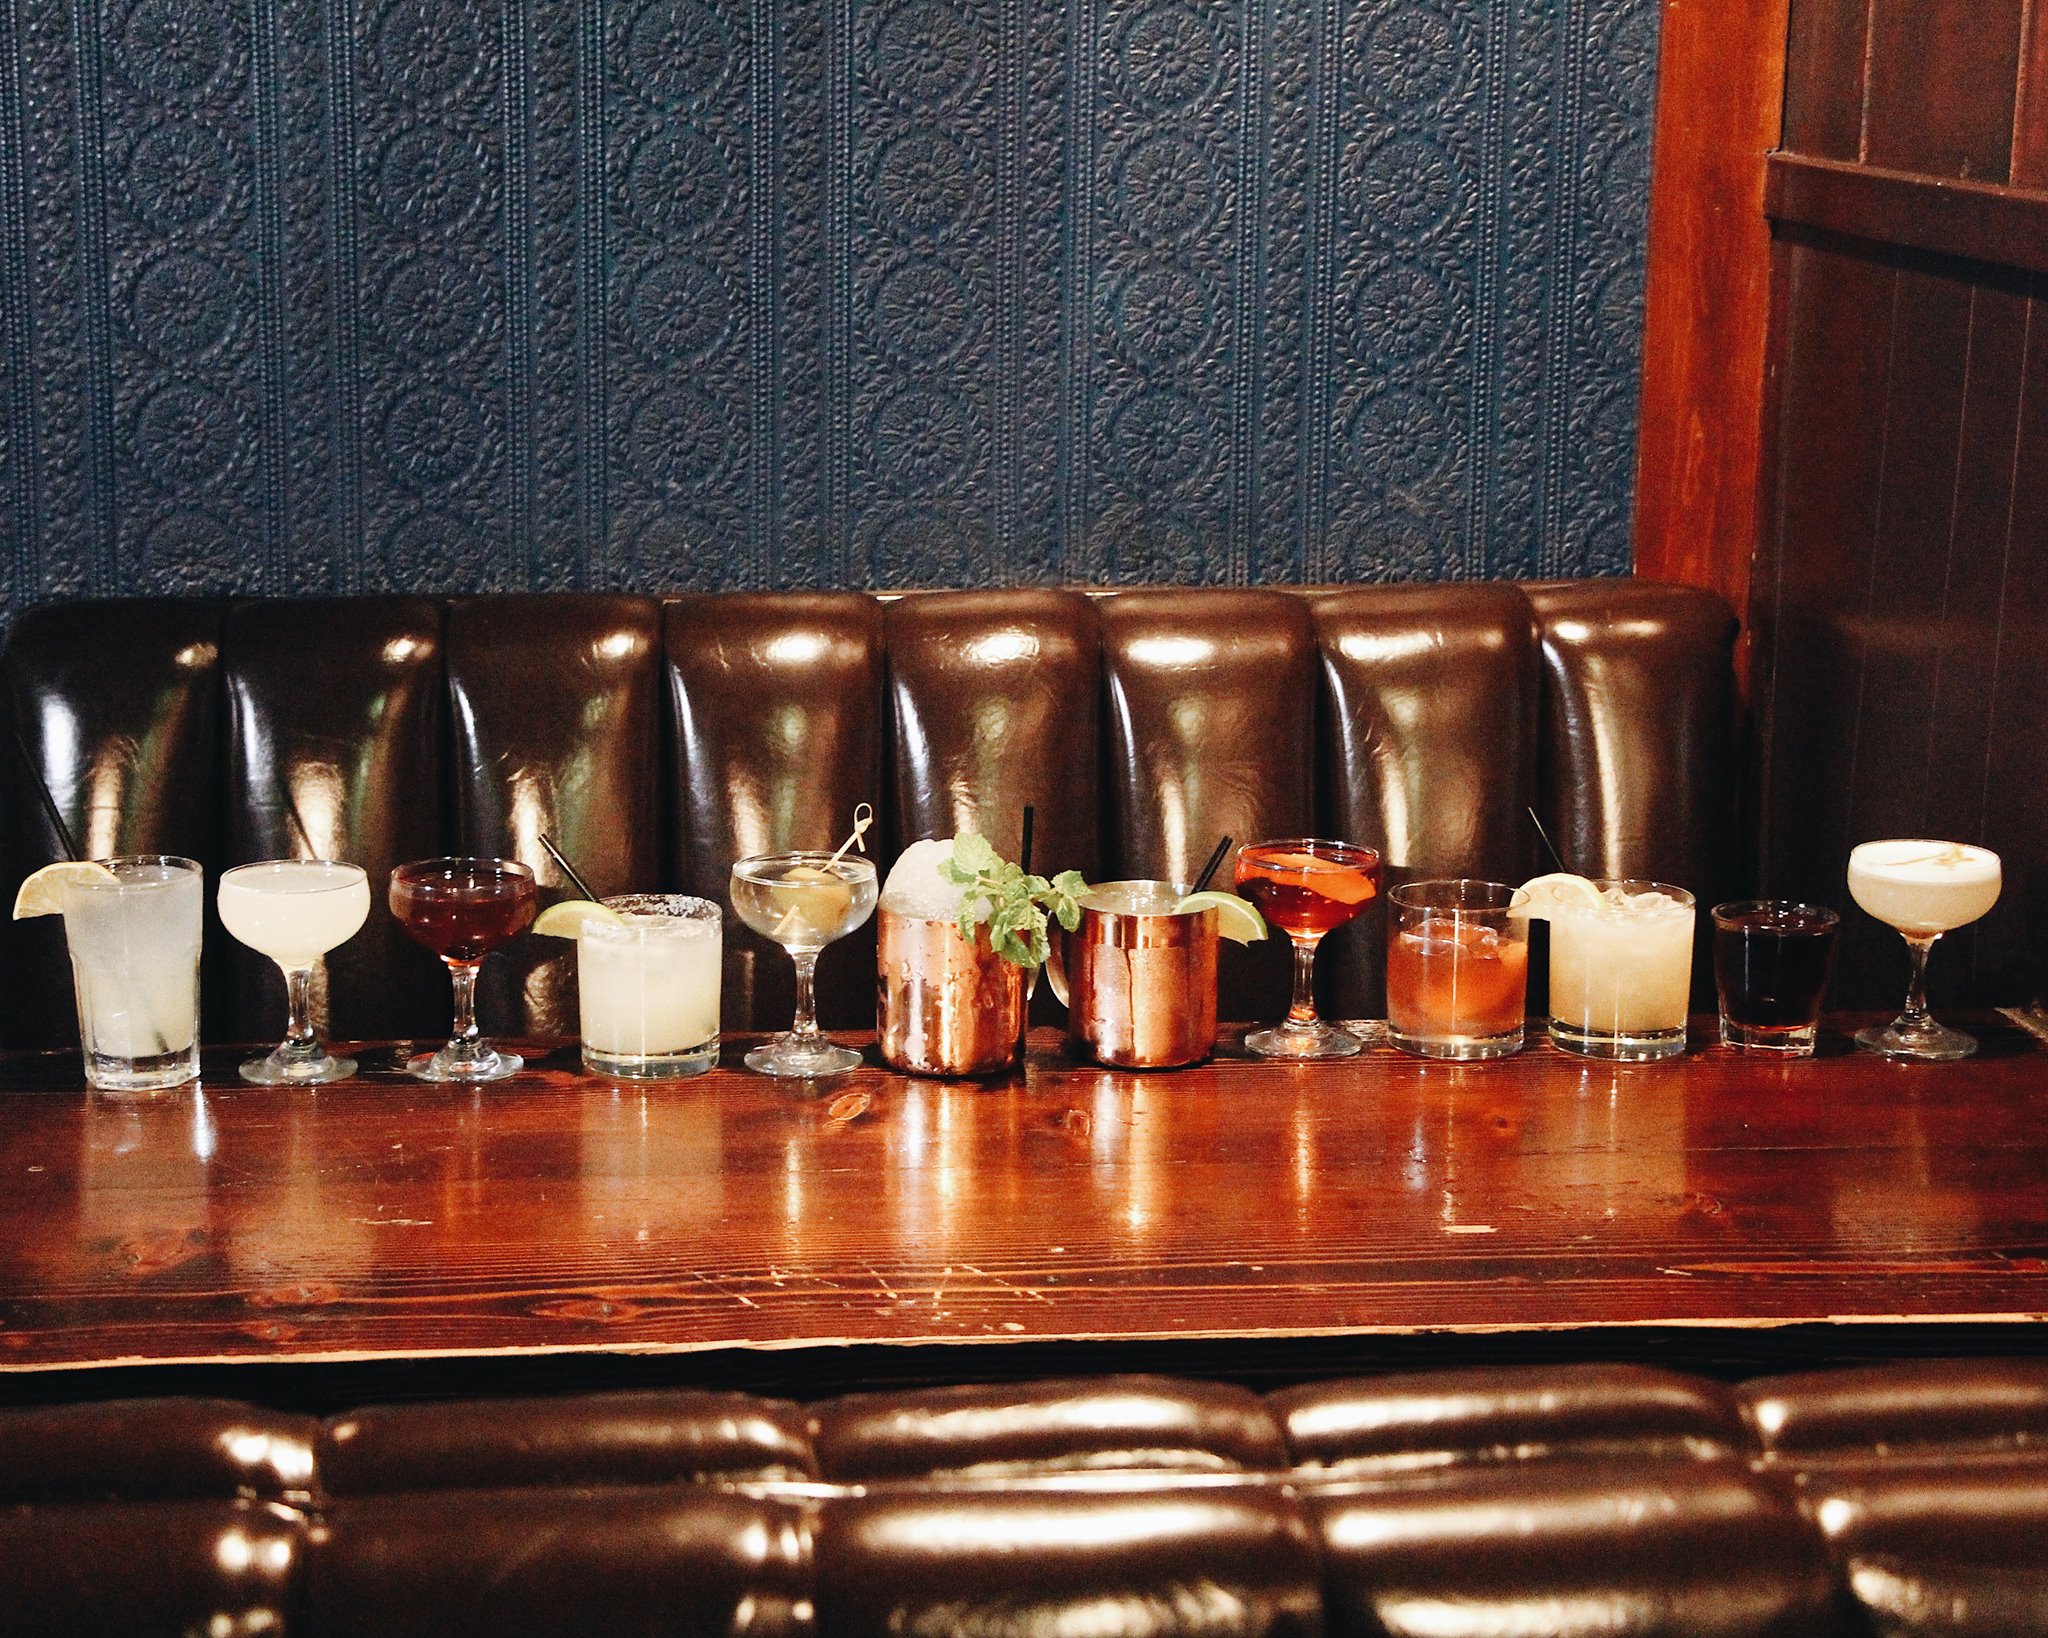 A run of a dozen drinks in various glasses along a wooden bar.